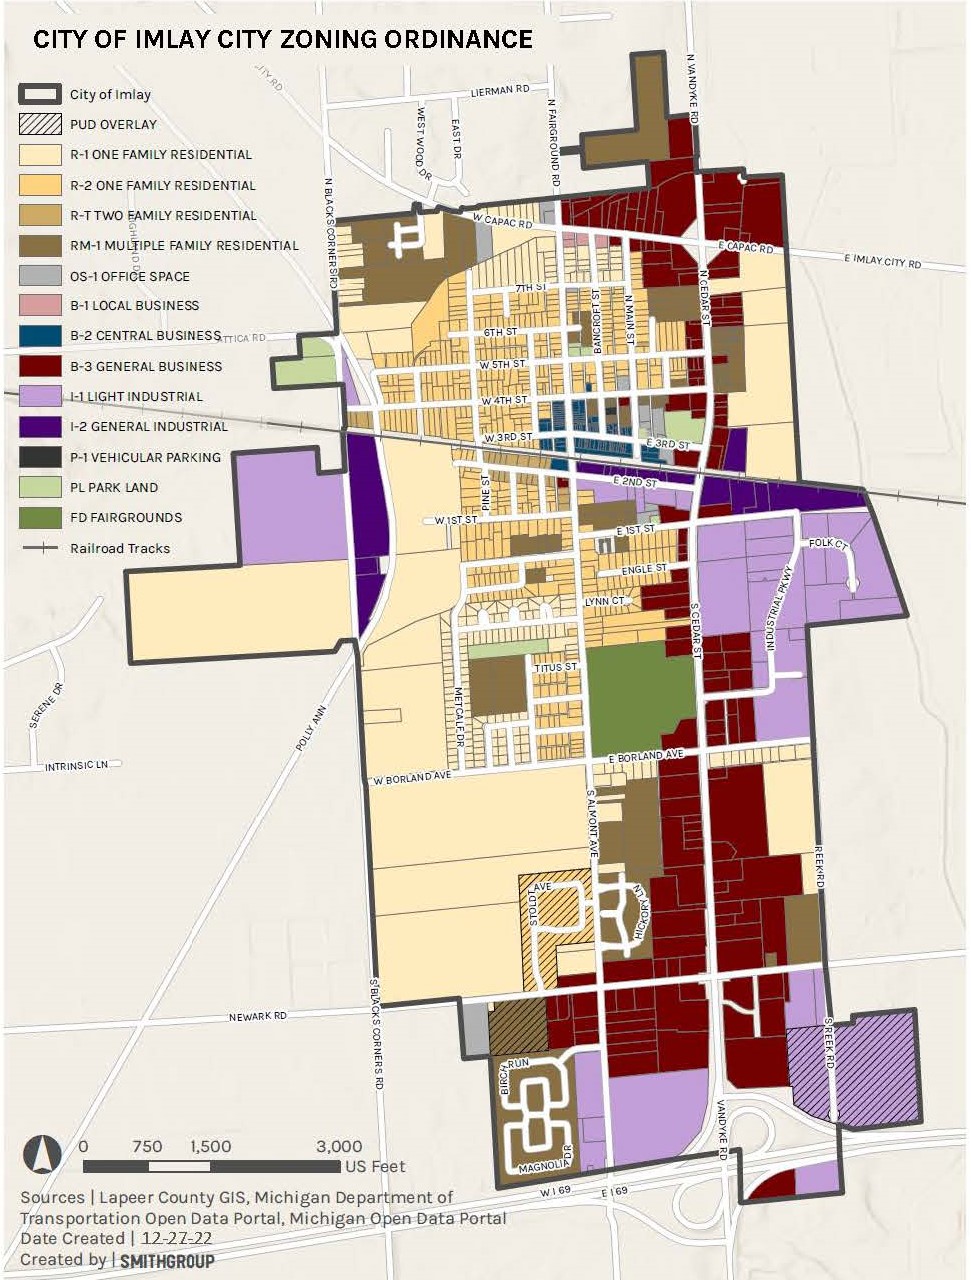 final zoning ordinance map december 27 2022 (002)